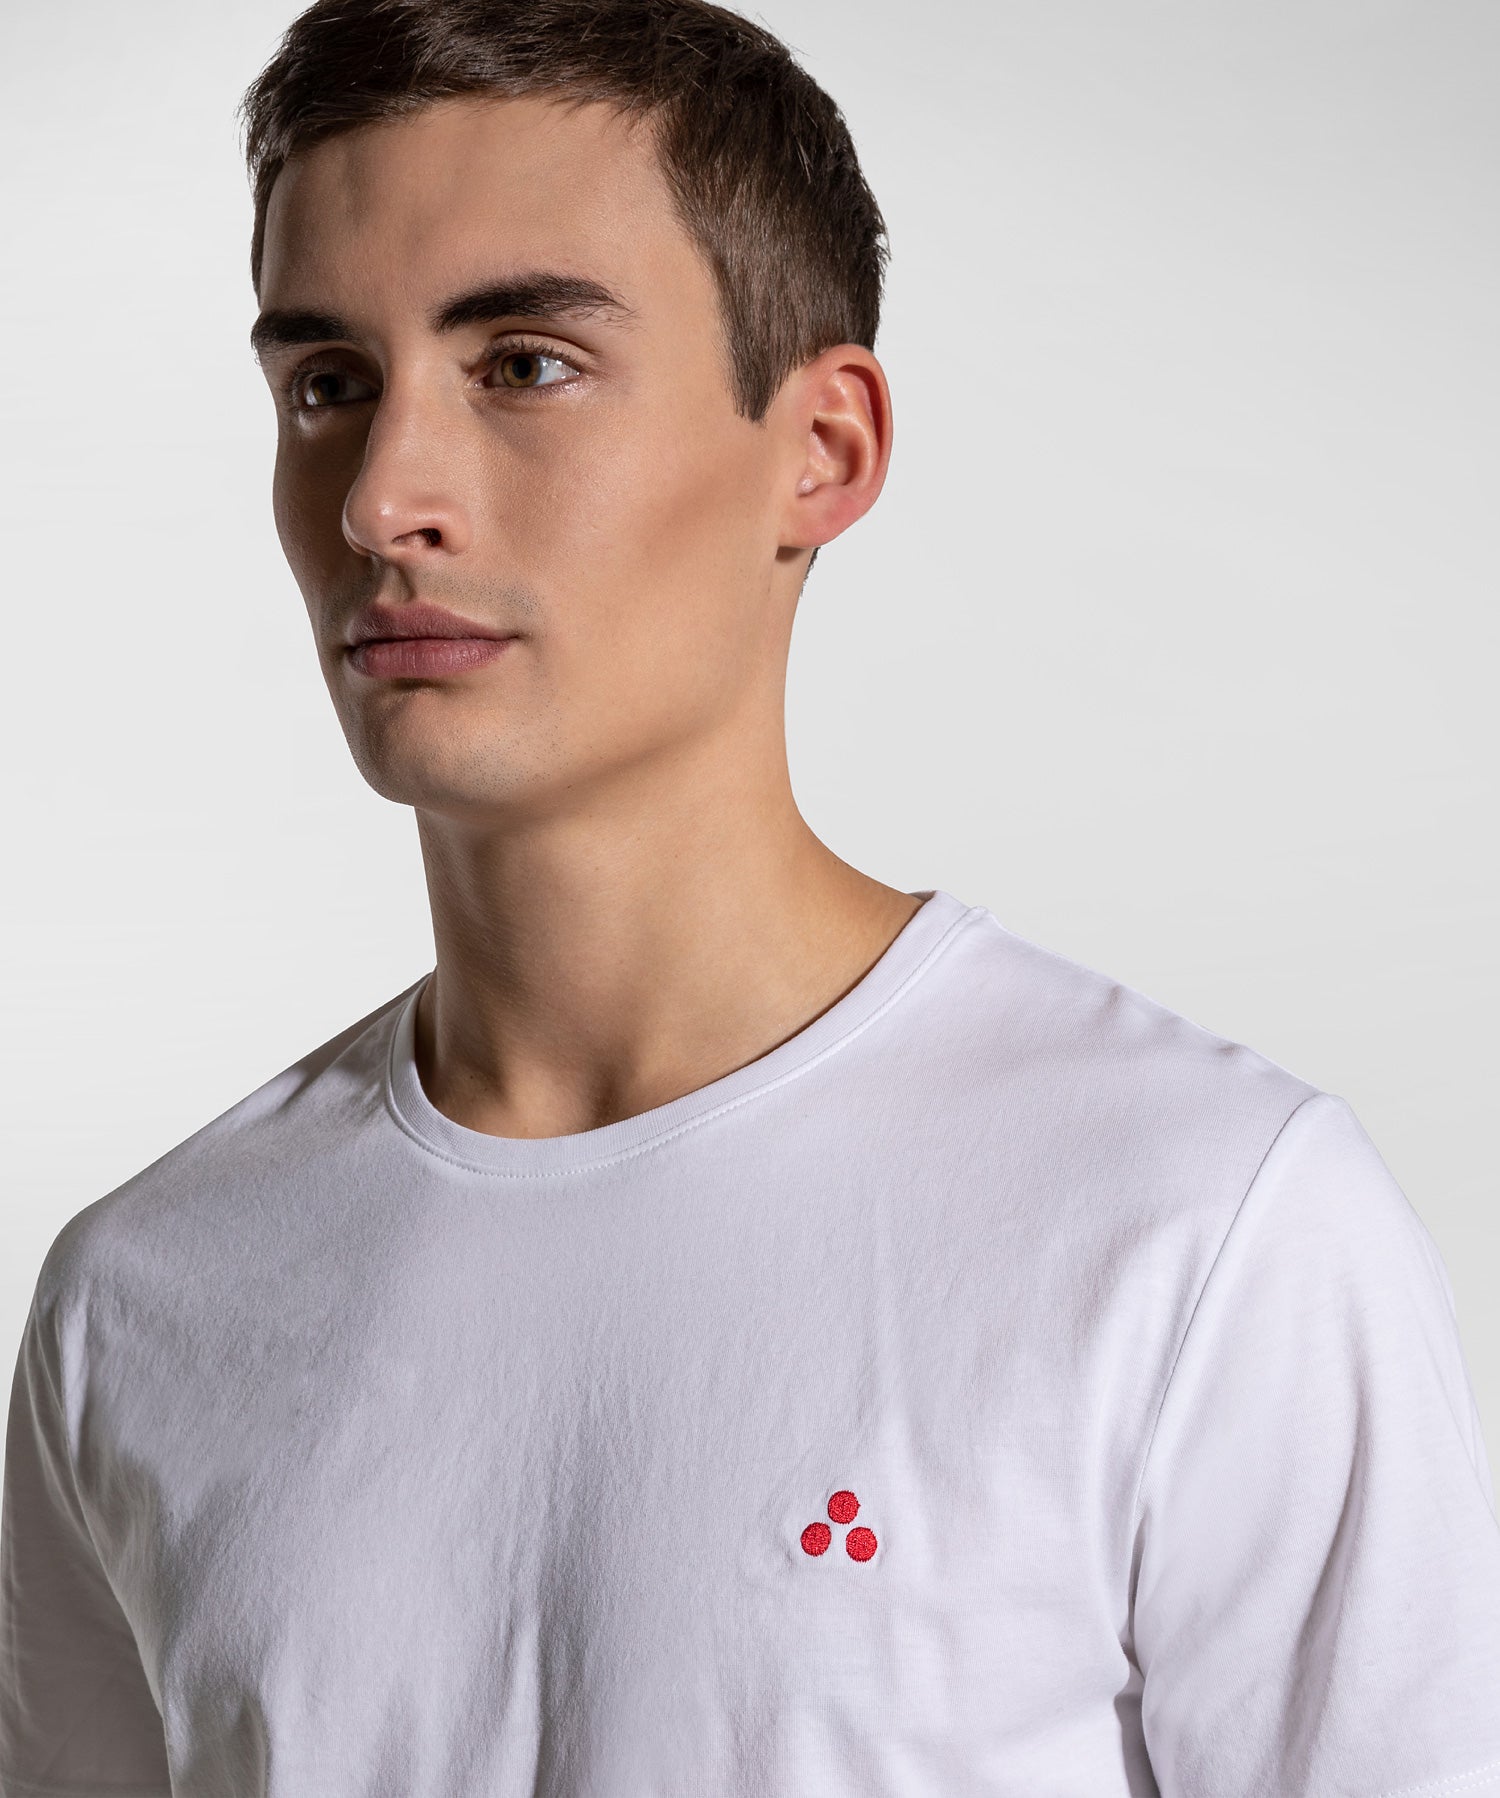 T-Shirt con Stampa / Bianco - Ideal Moda